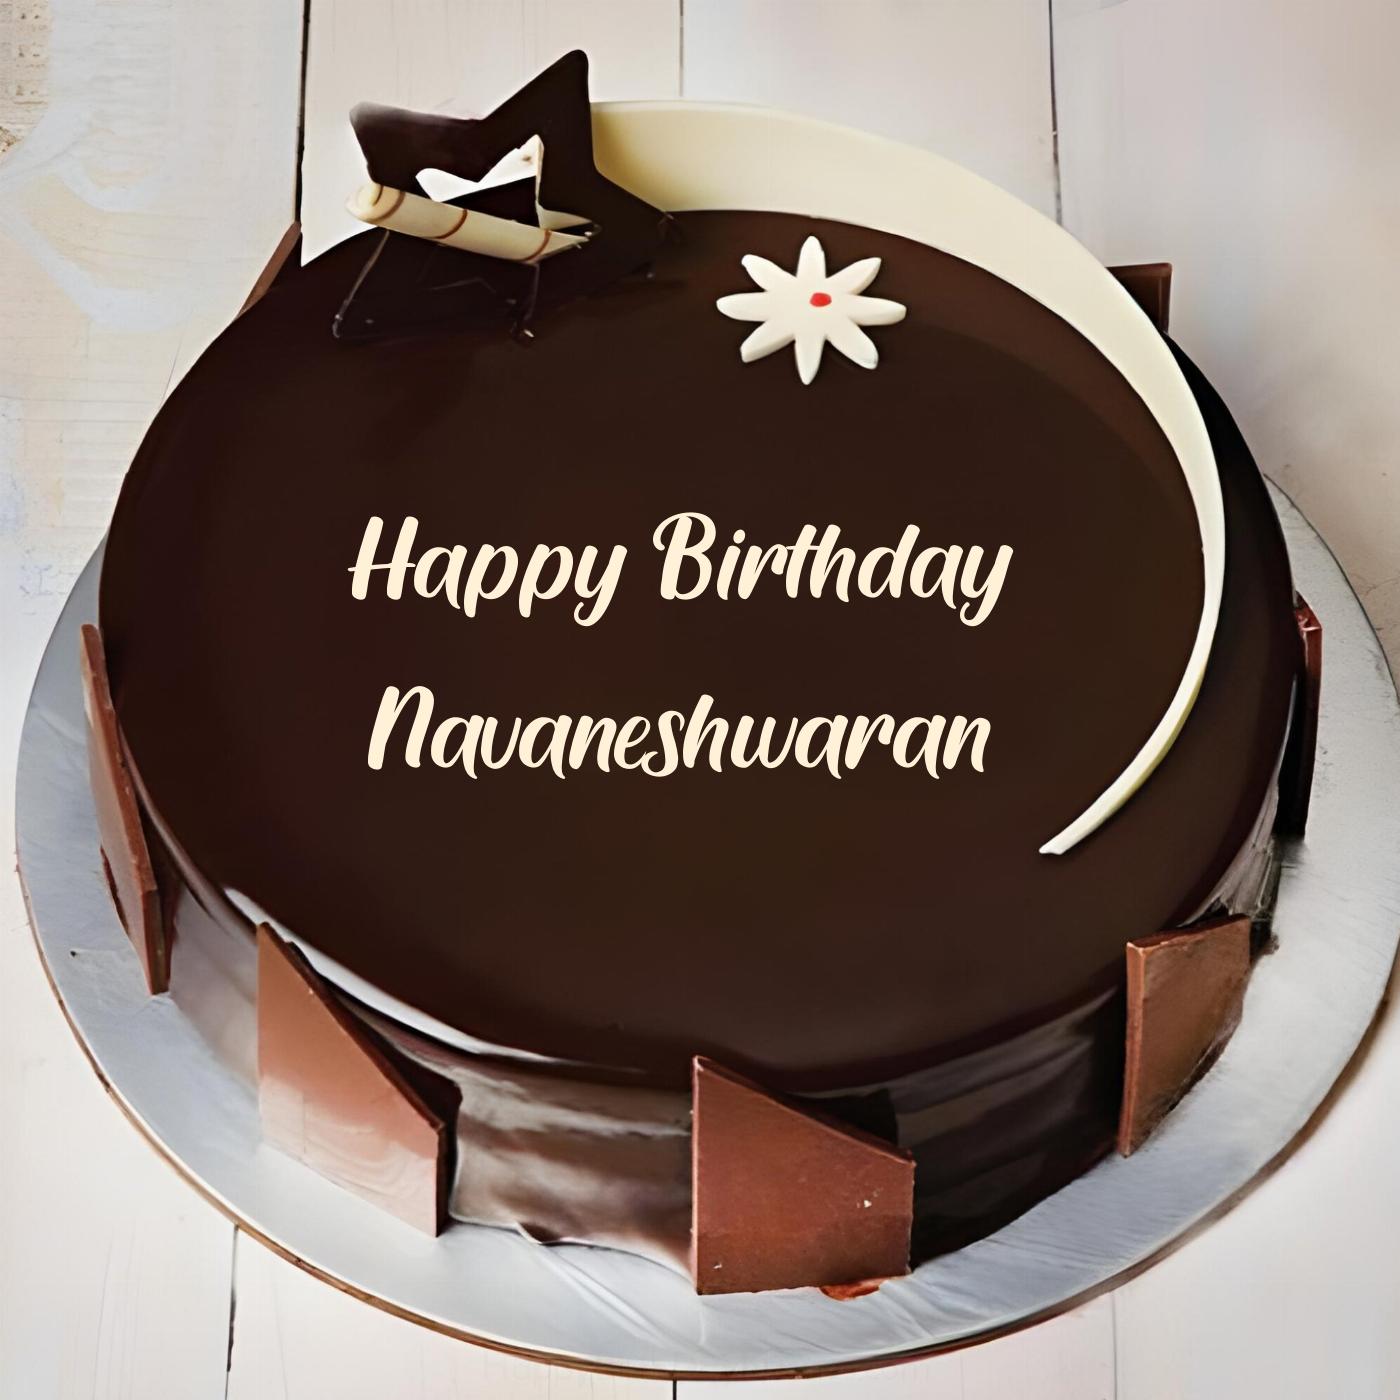 Happy Birthday Navaneshwaran Chocolate Star Cake